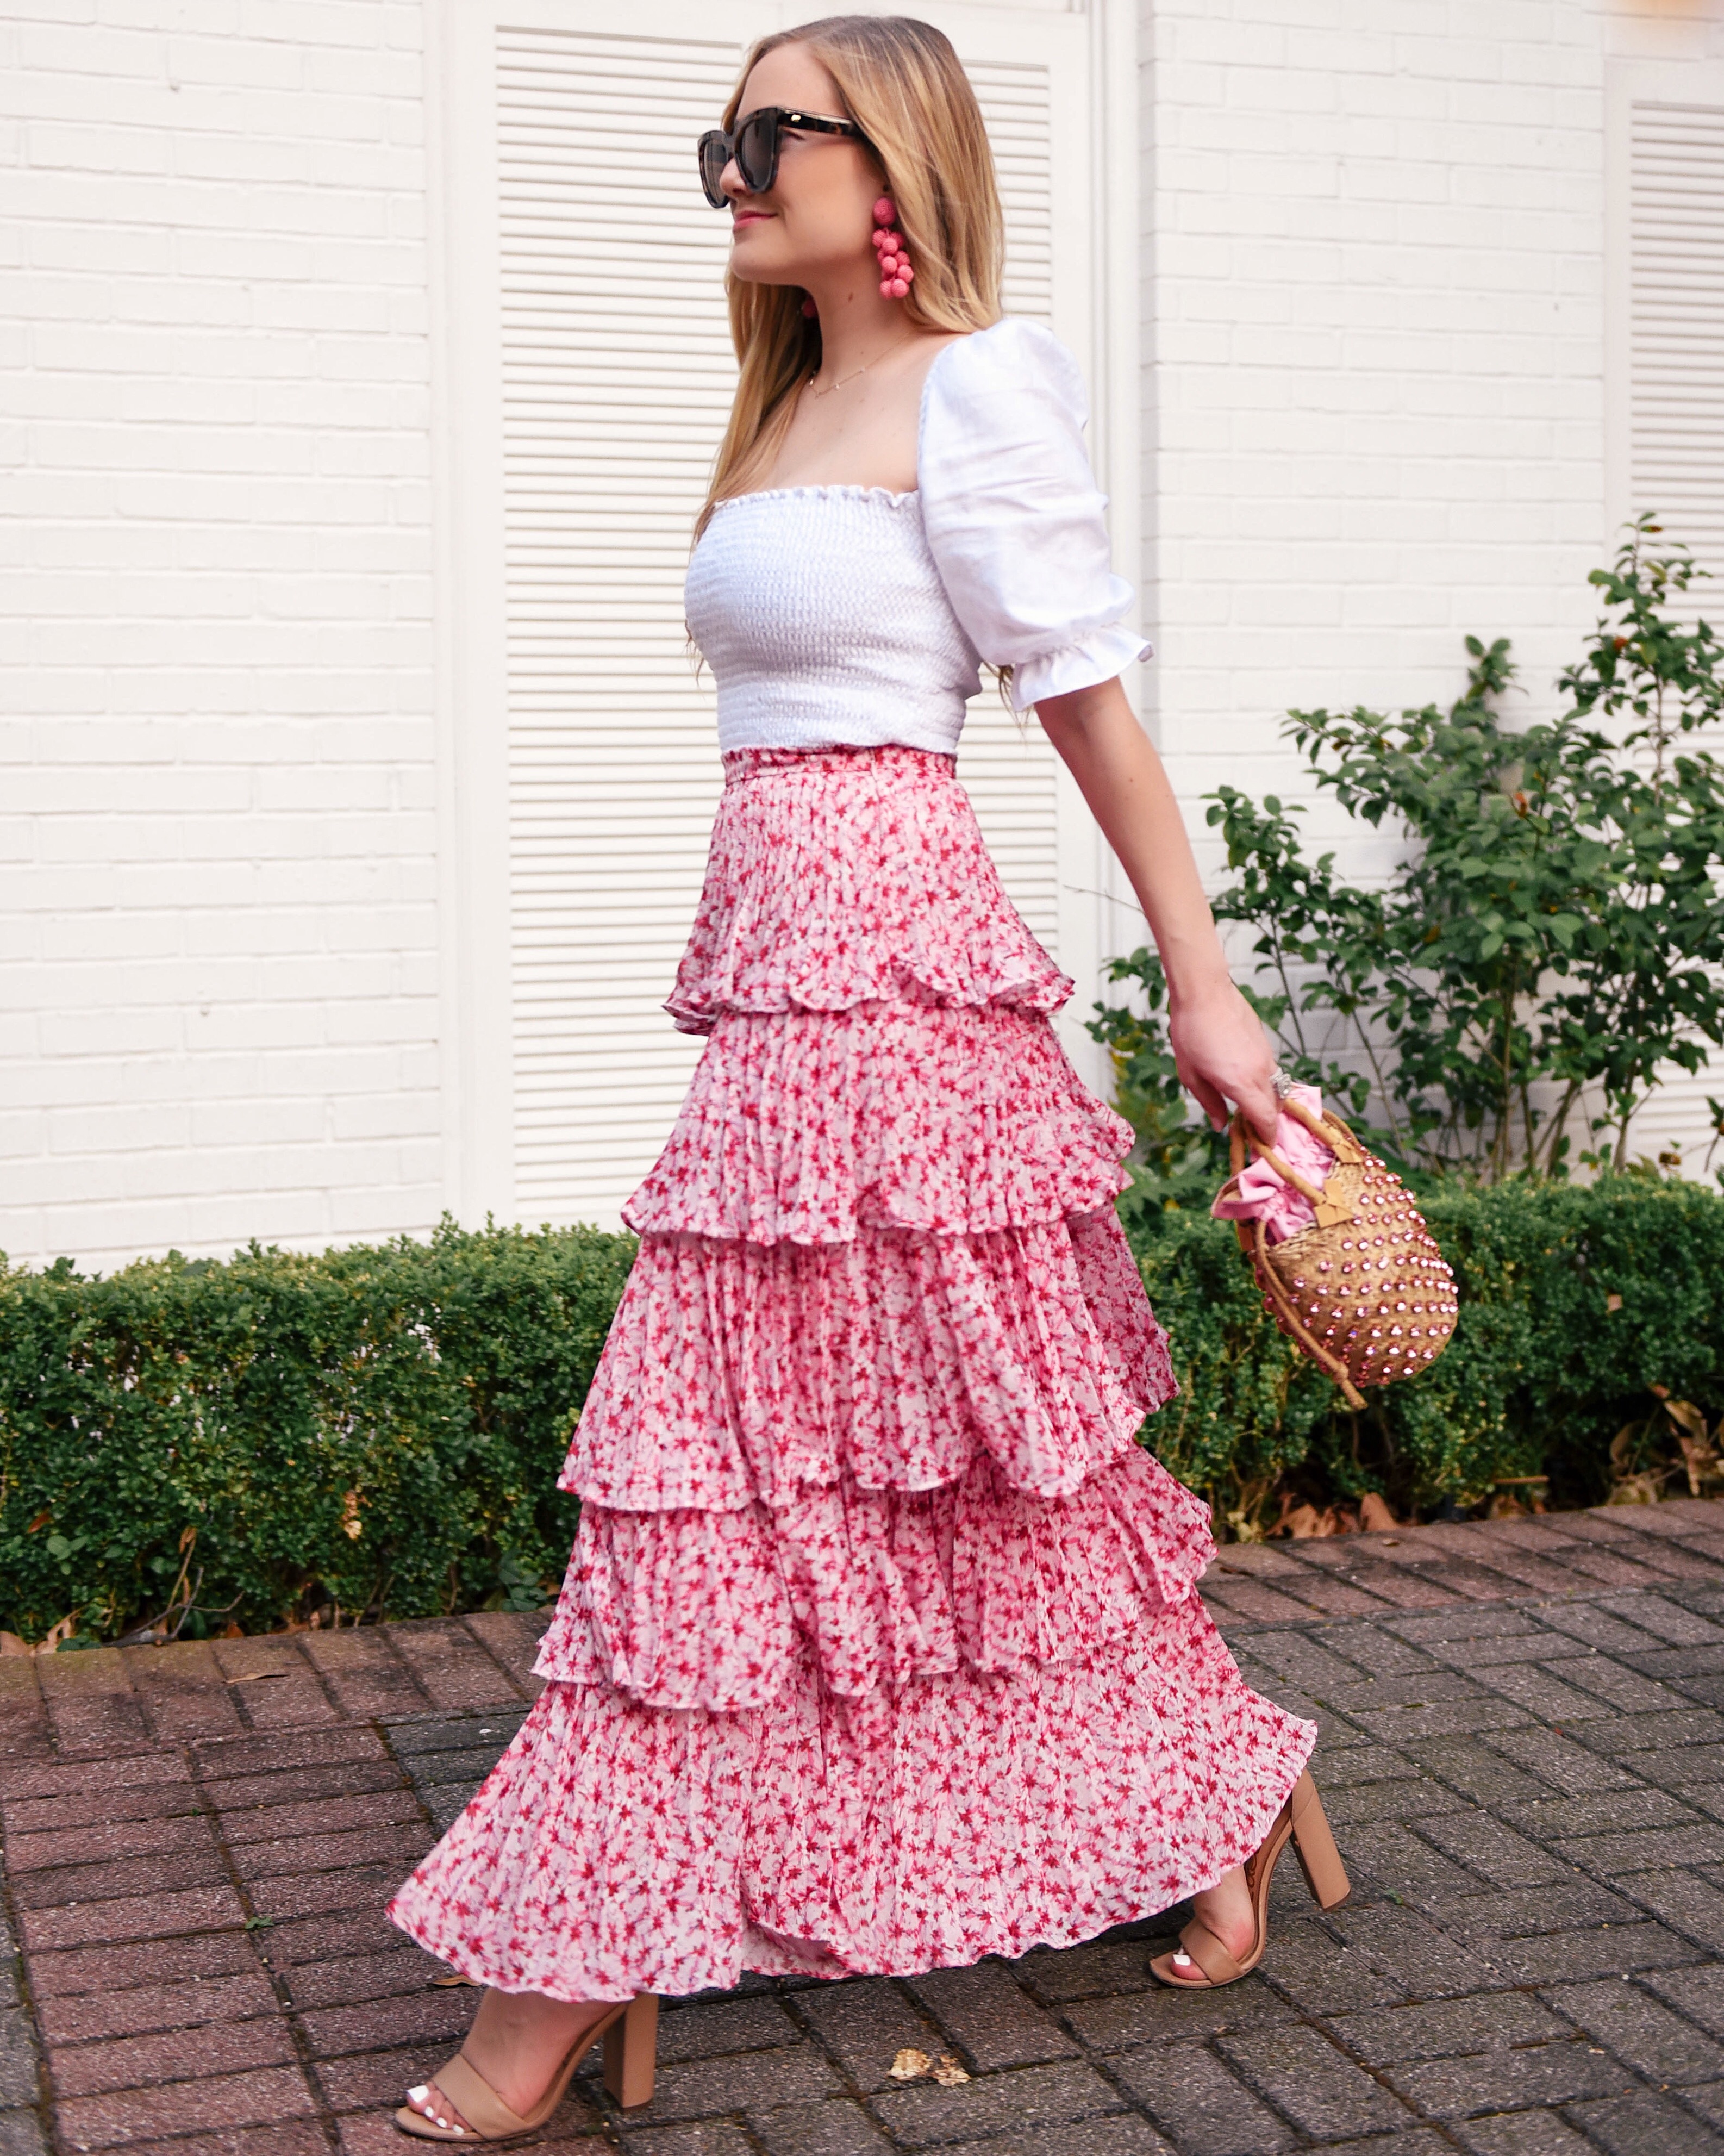 lo-murphy-dallas-blogger-amur-skirt-pink-tierred-skirt-reformation-top-nordstrom-sam-edelman-sandals